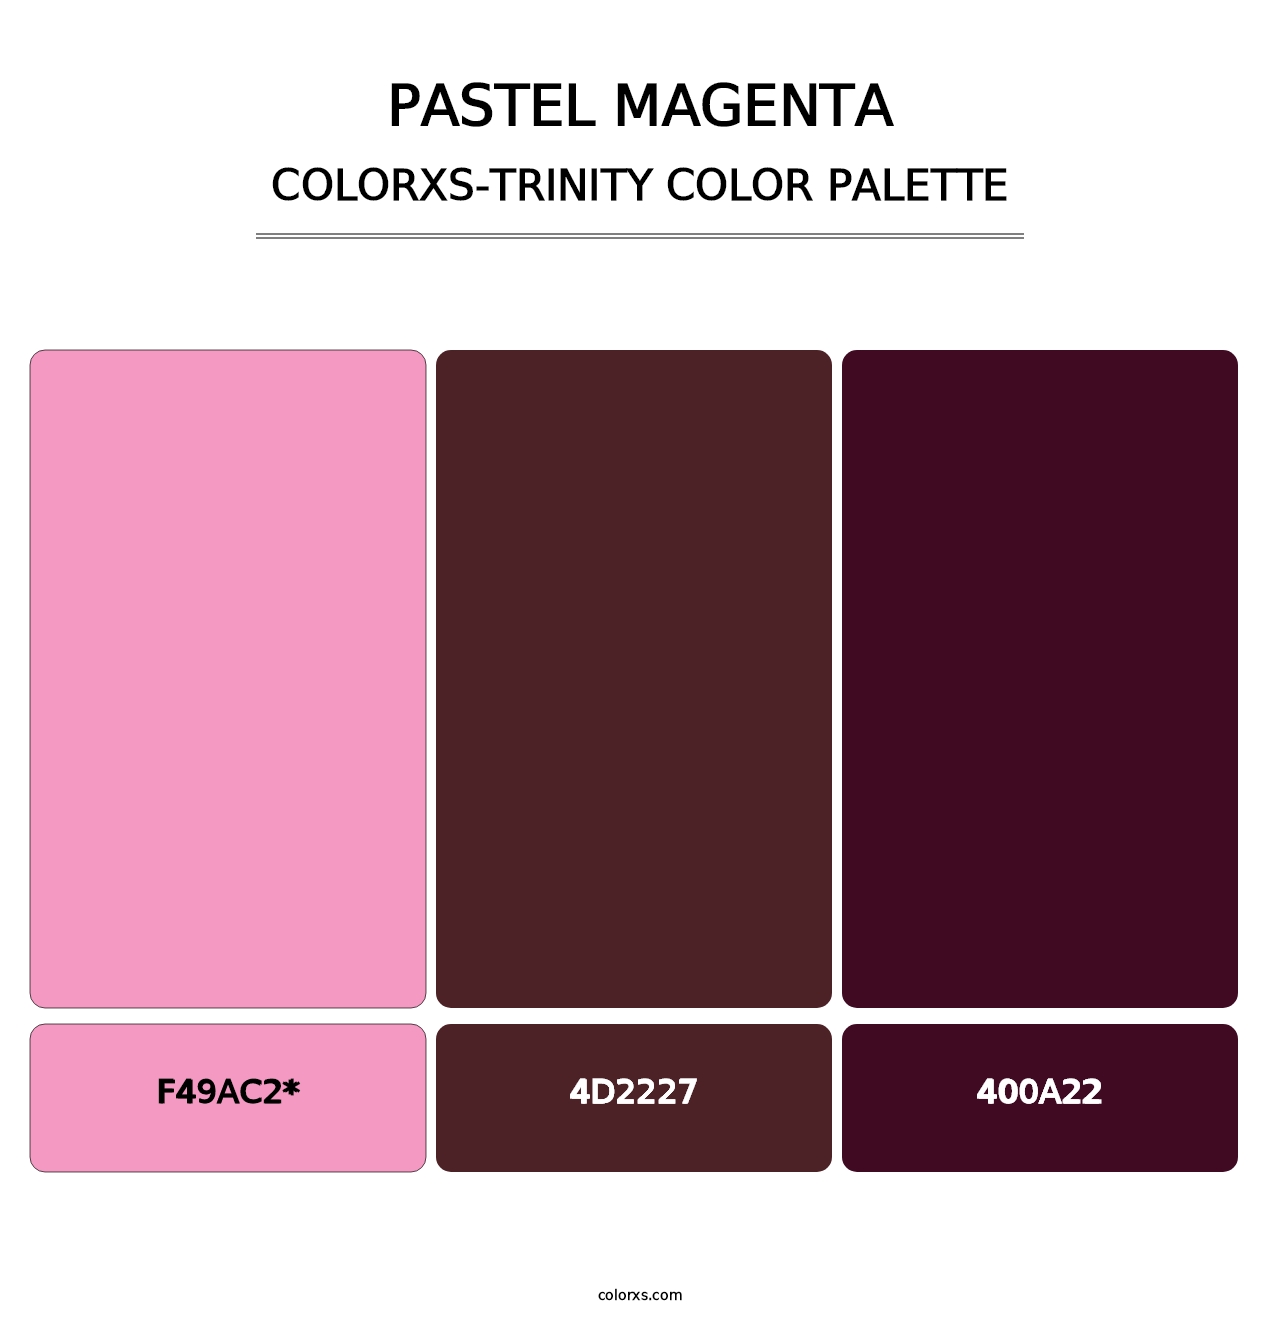 Pastel Magenta - Colorxs Trinity Palette